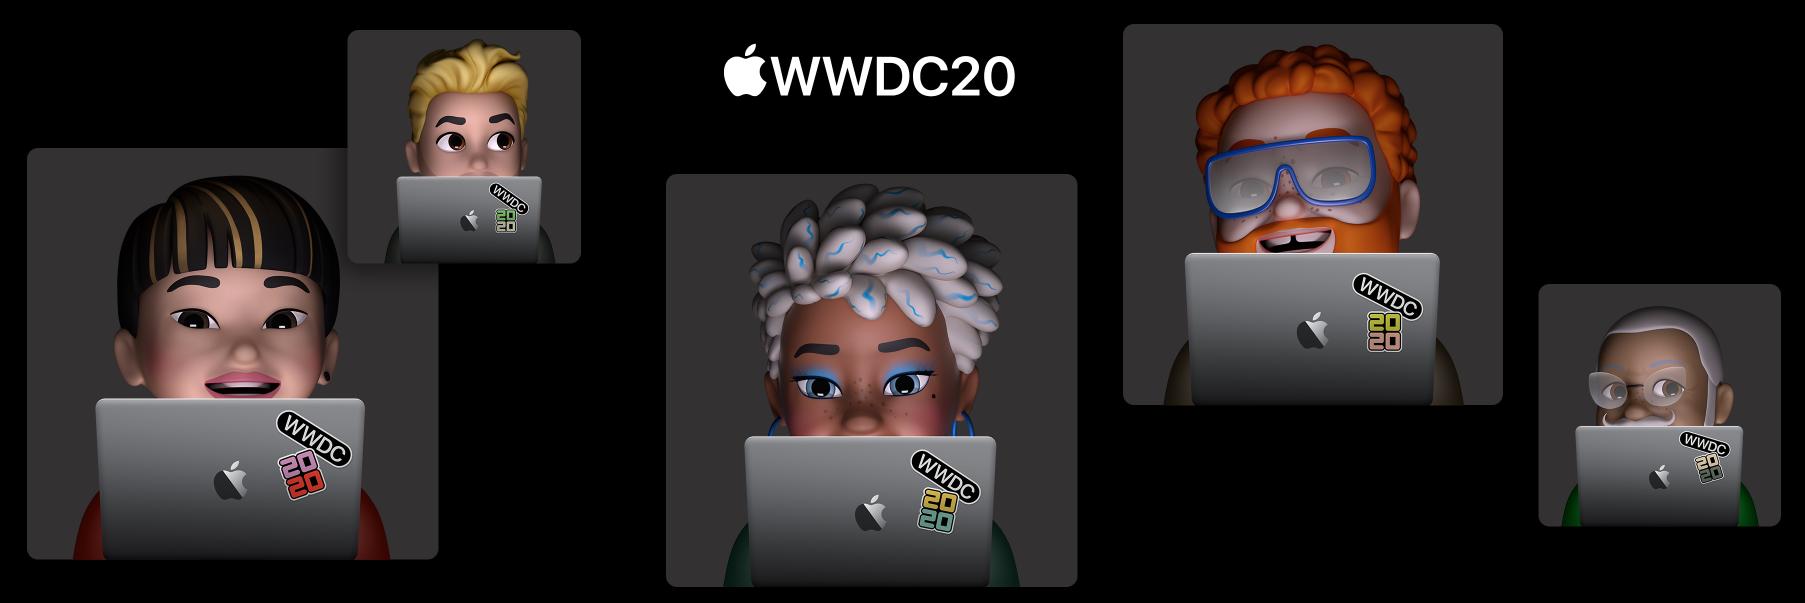 Apple Wwdc20 Banner